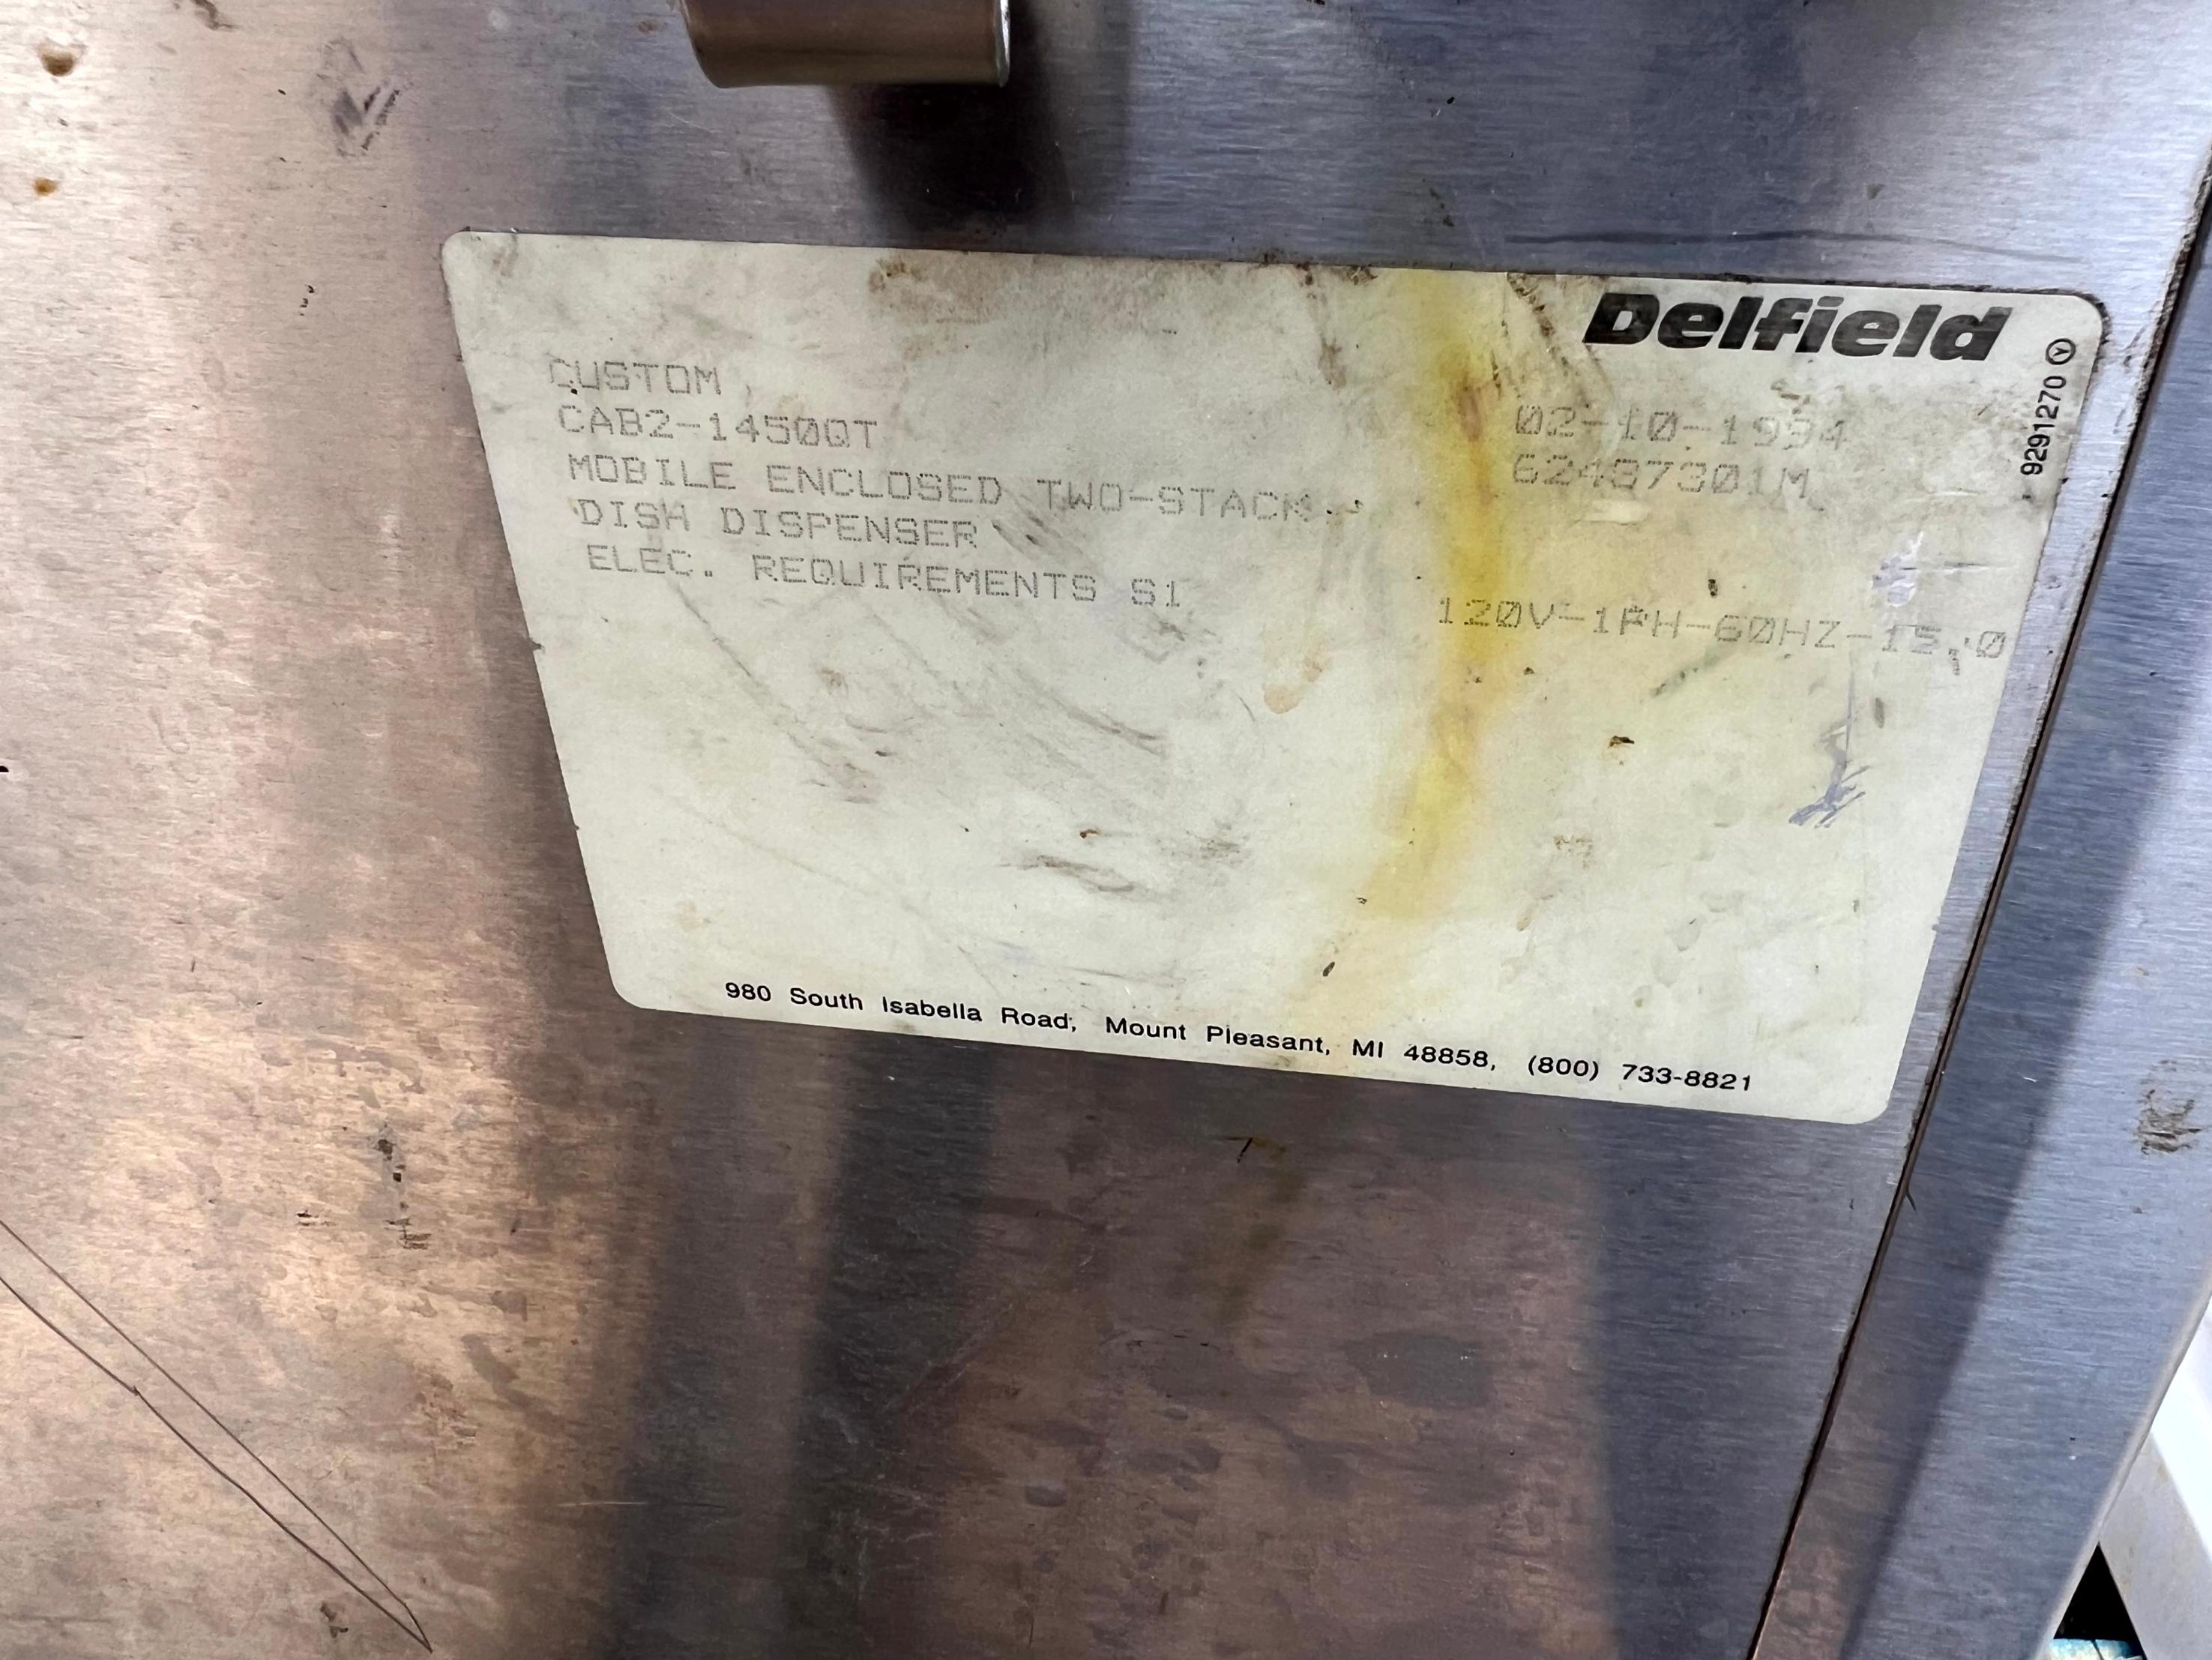 Delfield Dish Dispenser